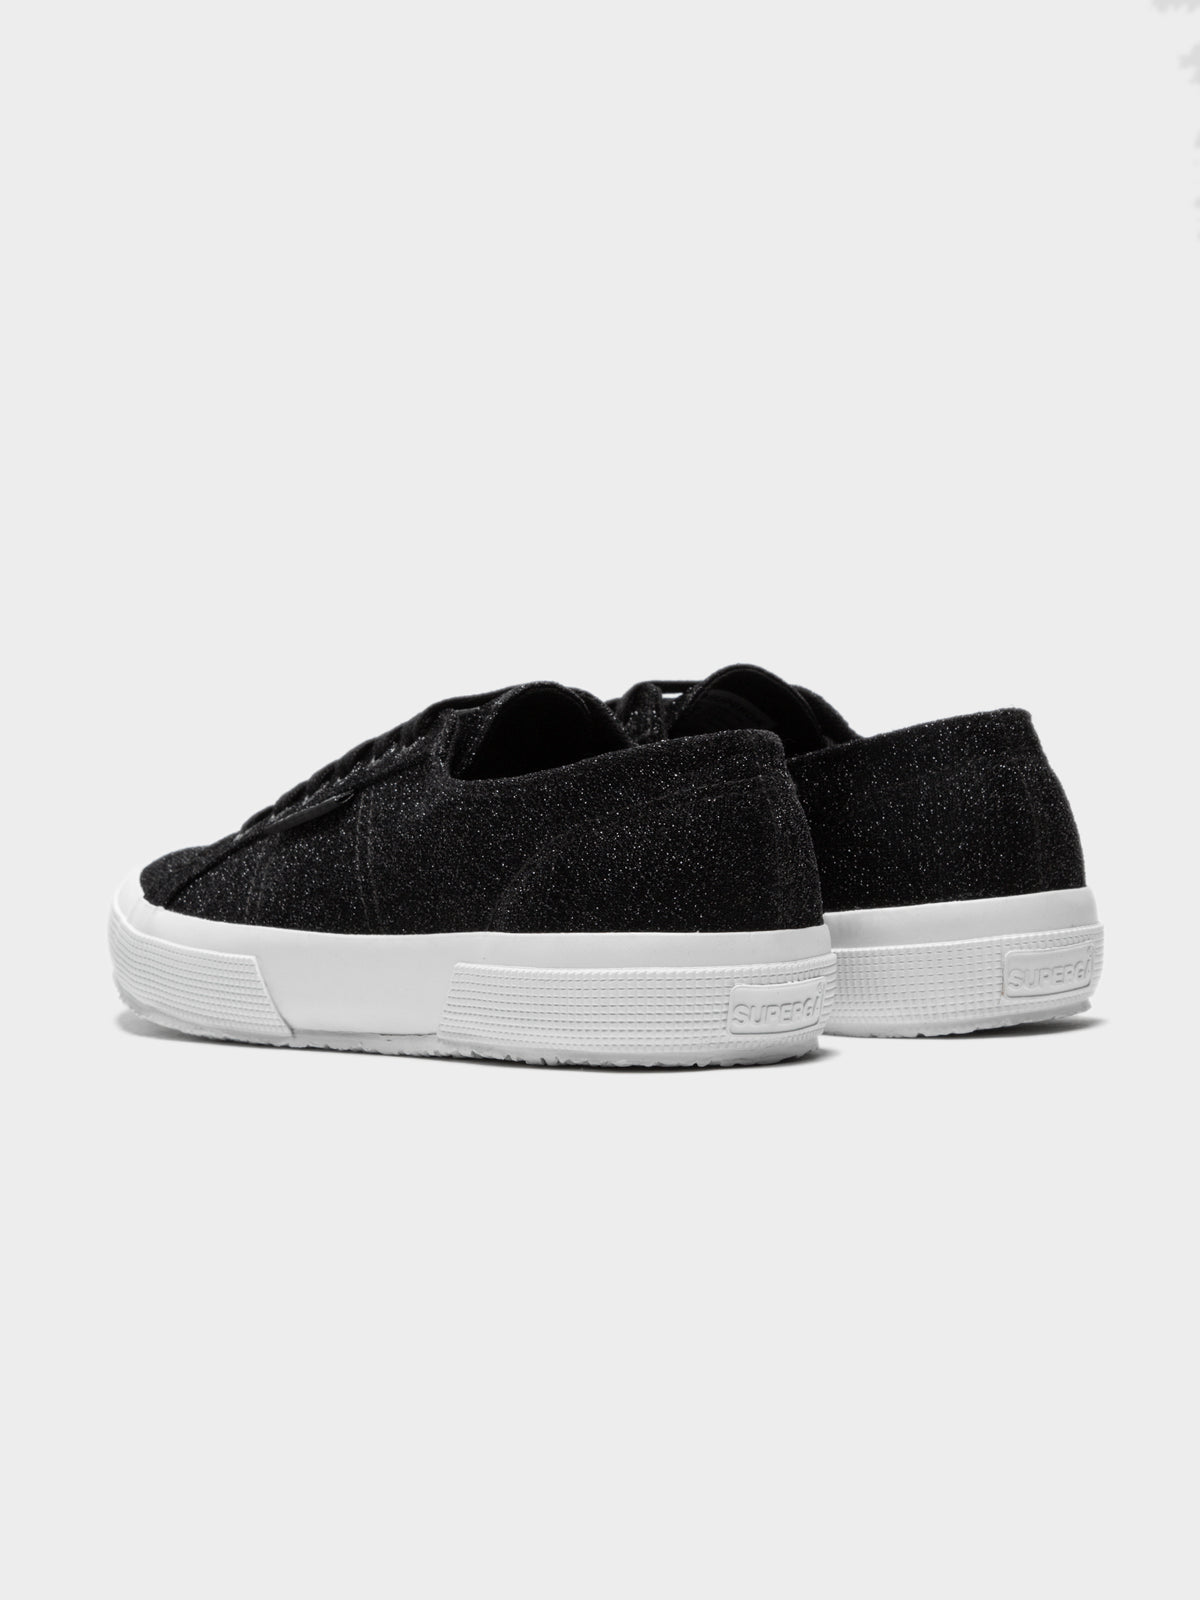 2750 Jersey Lurex Sneakers in Black